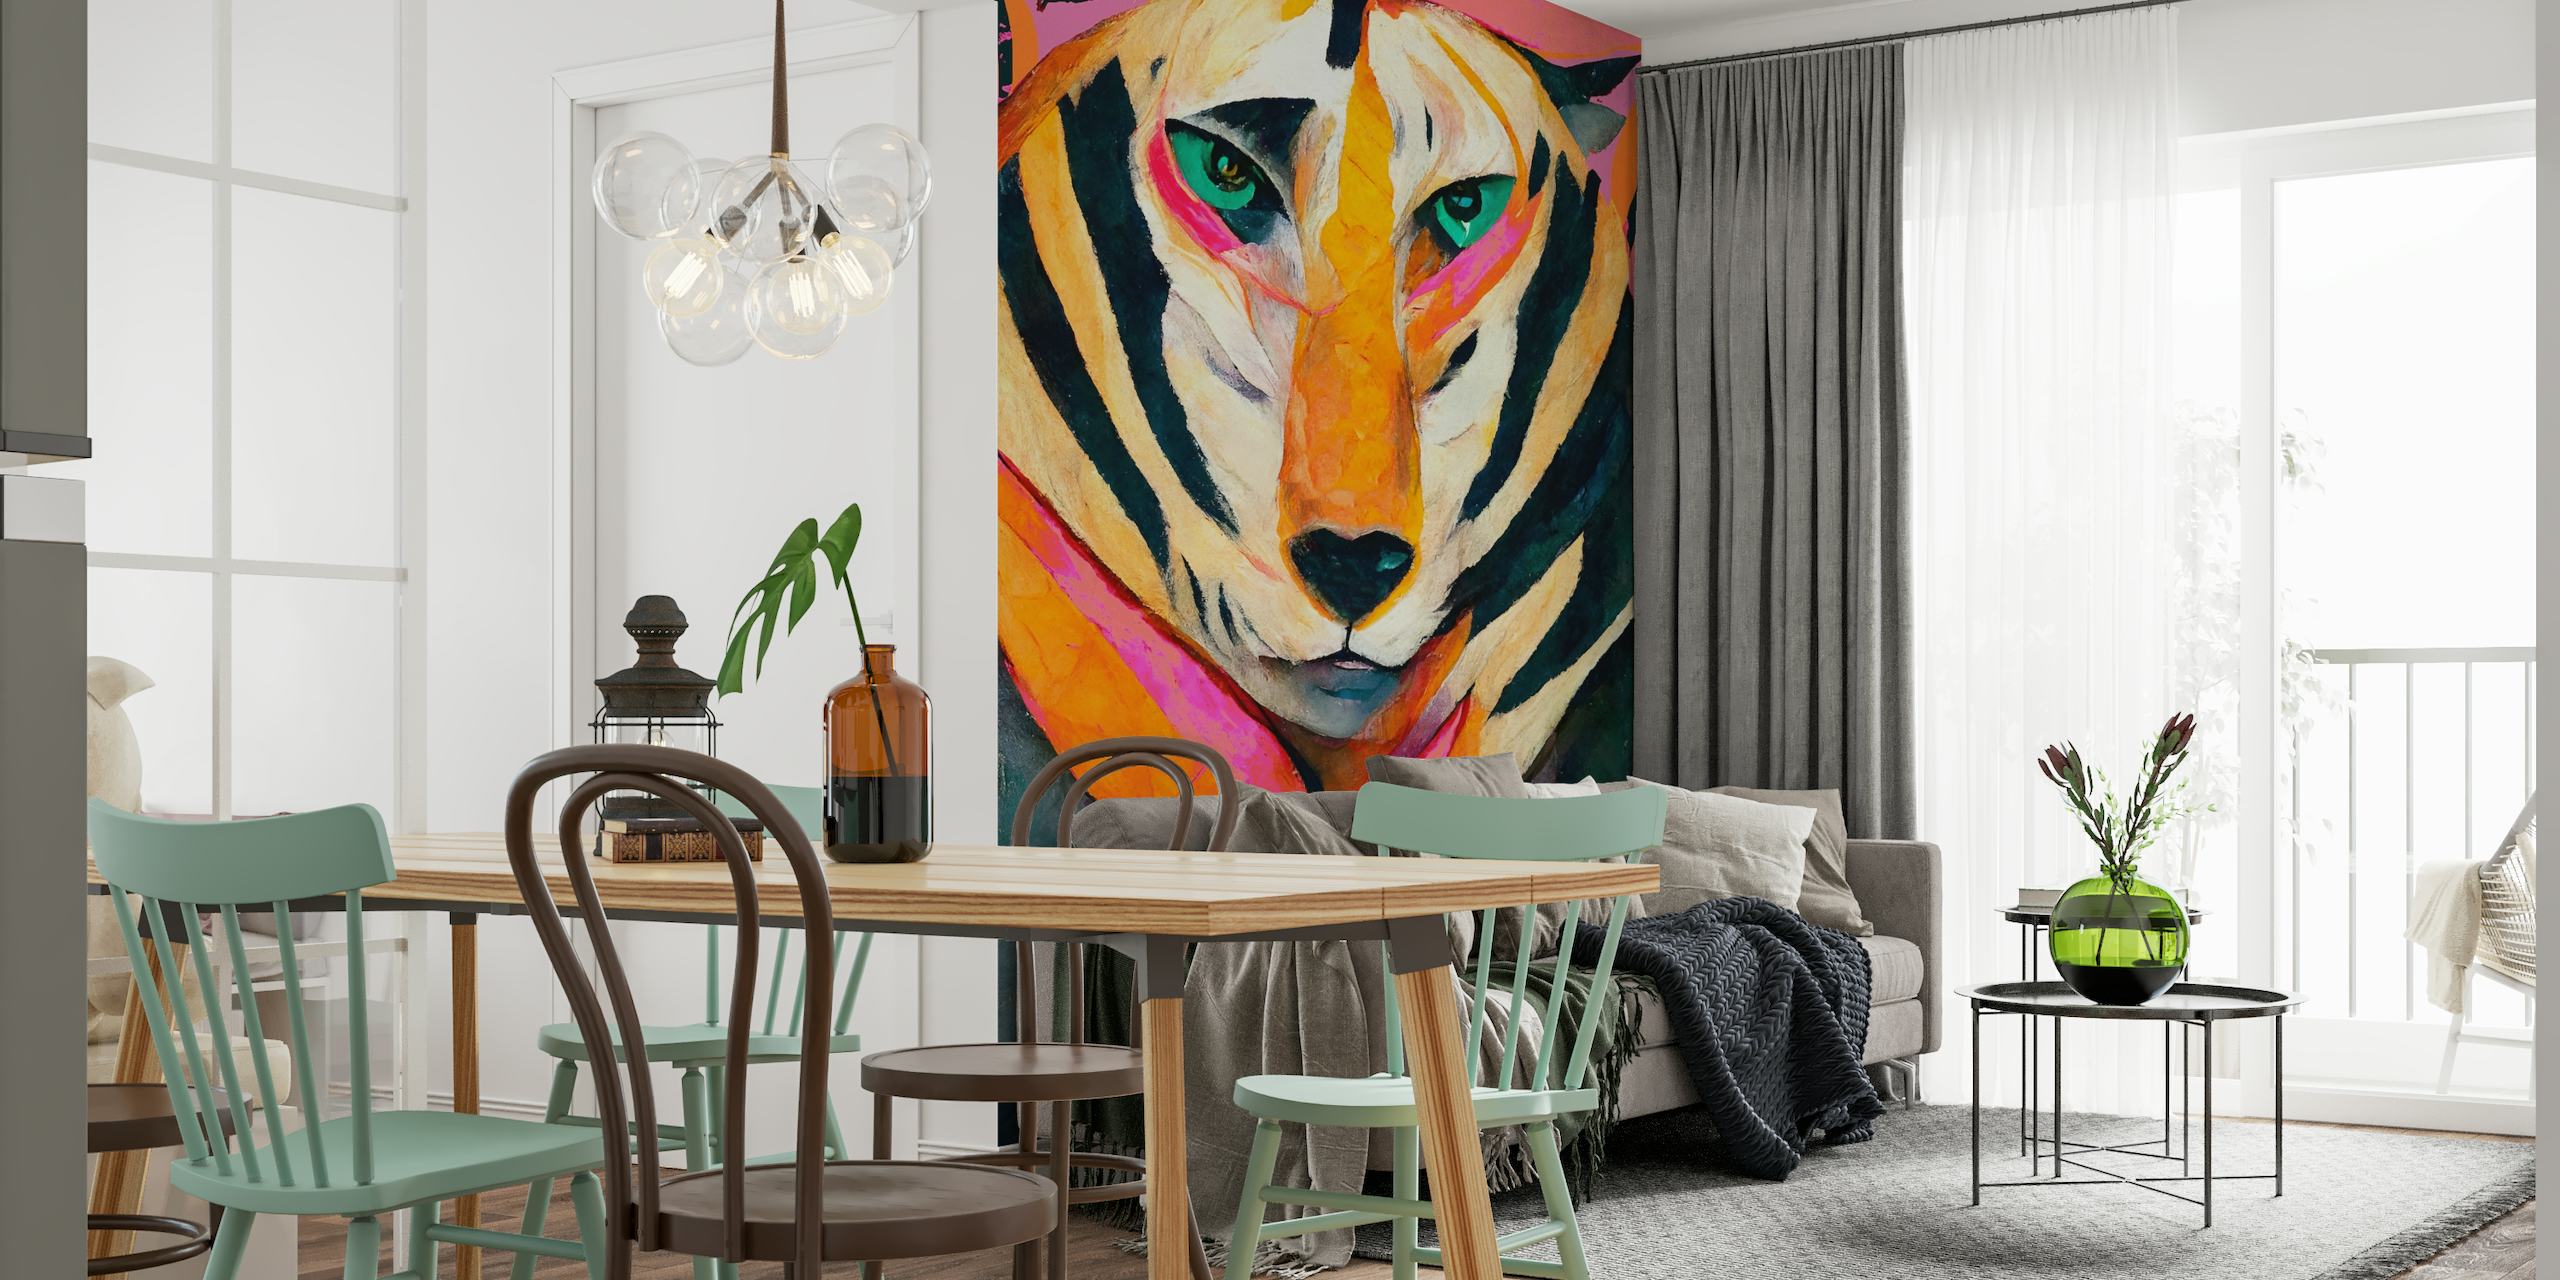 The Tiger wallpaper